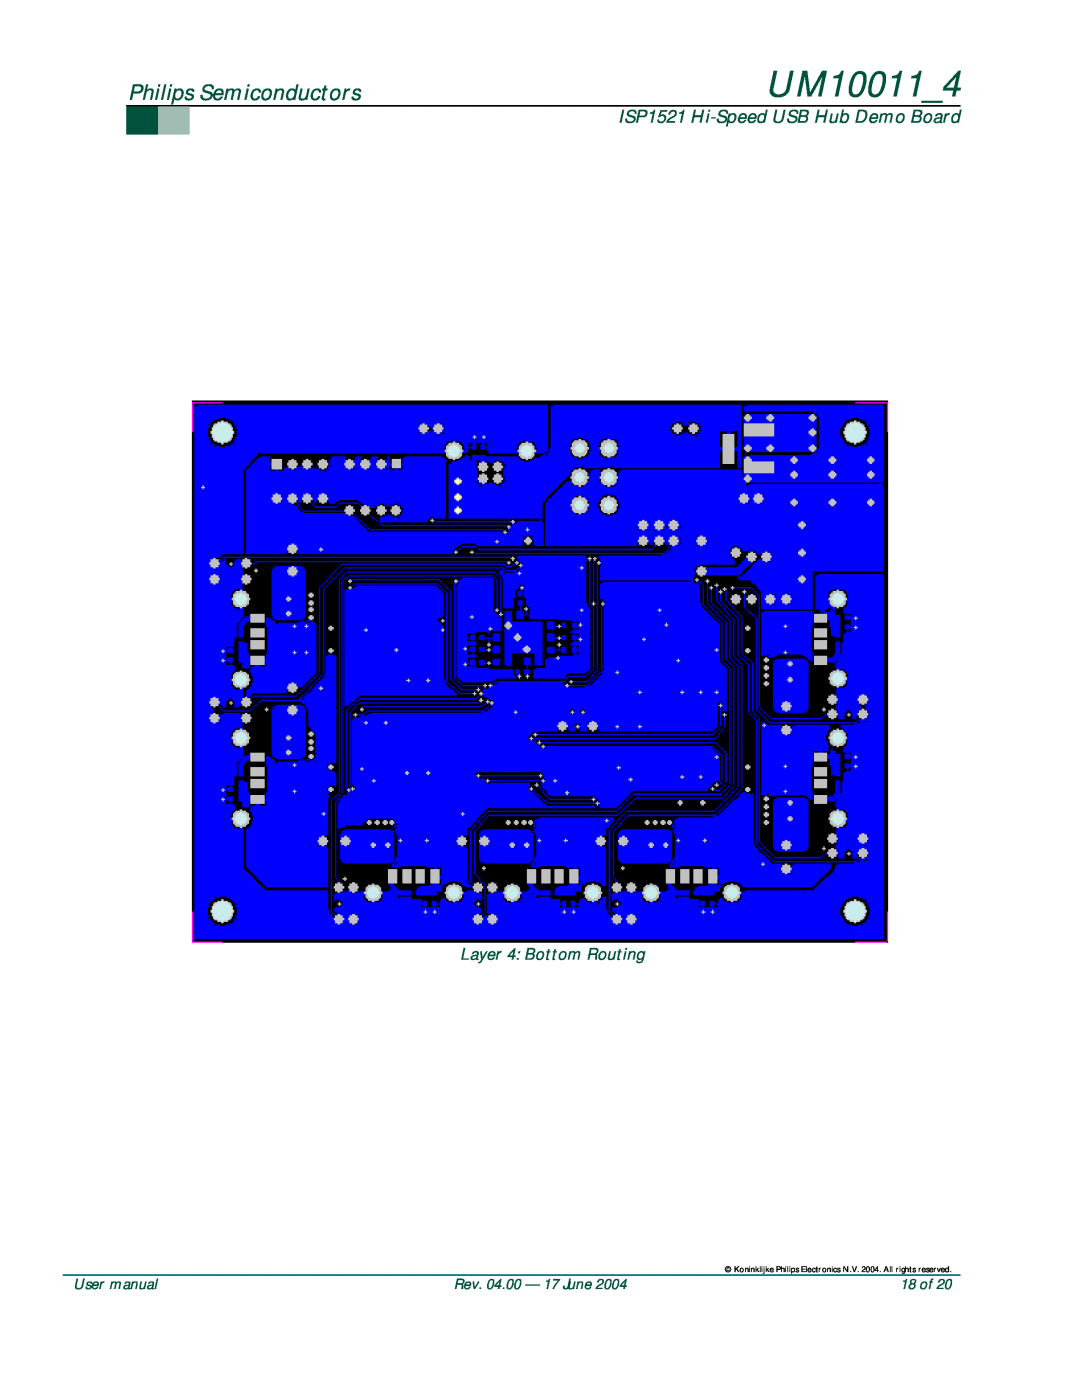 Philips user manual UM10011_4, Philips Semiconductors, ISP1521 Hi-SpeedUSB Hub Demo Board, Layer 4 Bottom Routing, 18 of 